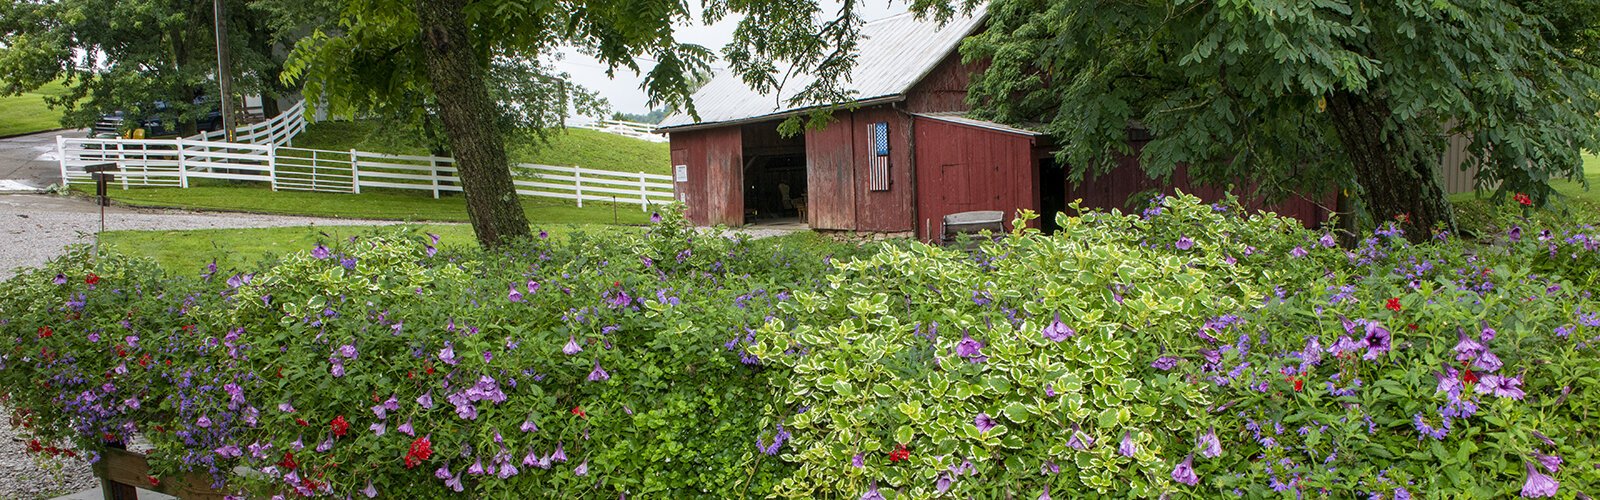 Neltner's Farm, Four Mile Road, Camp Springs, Ky.